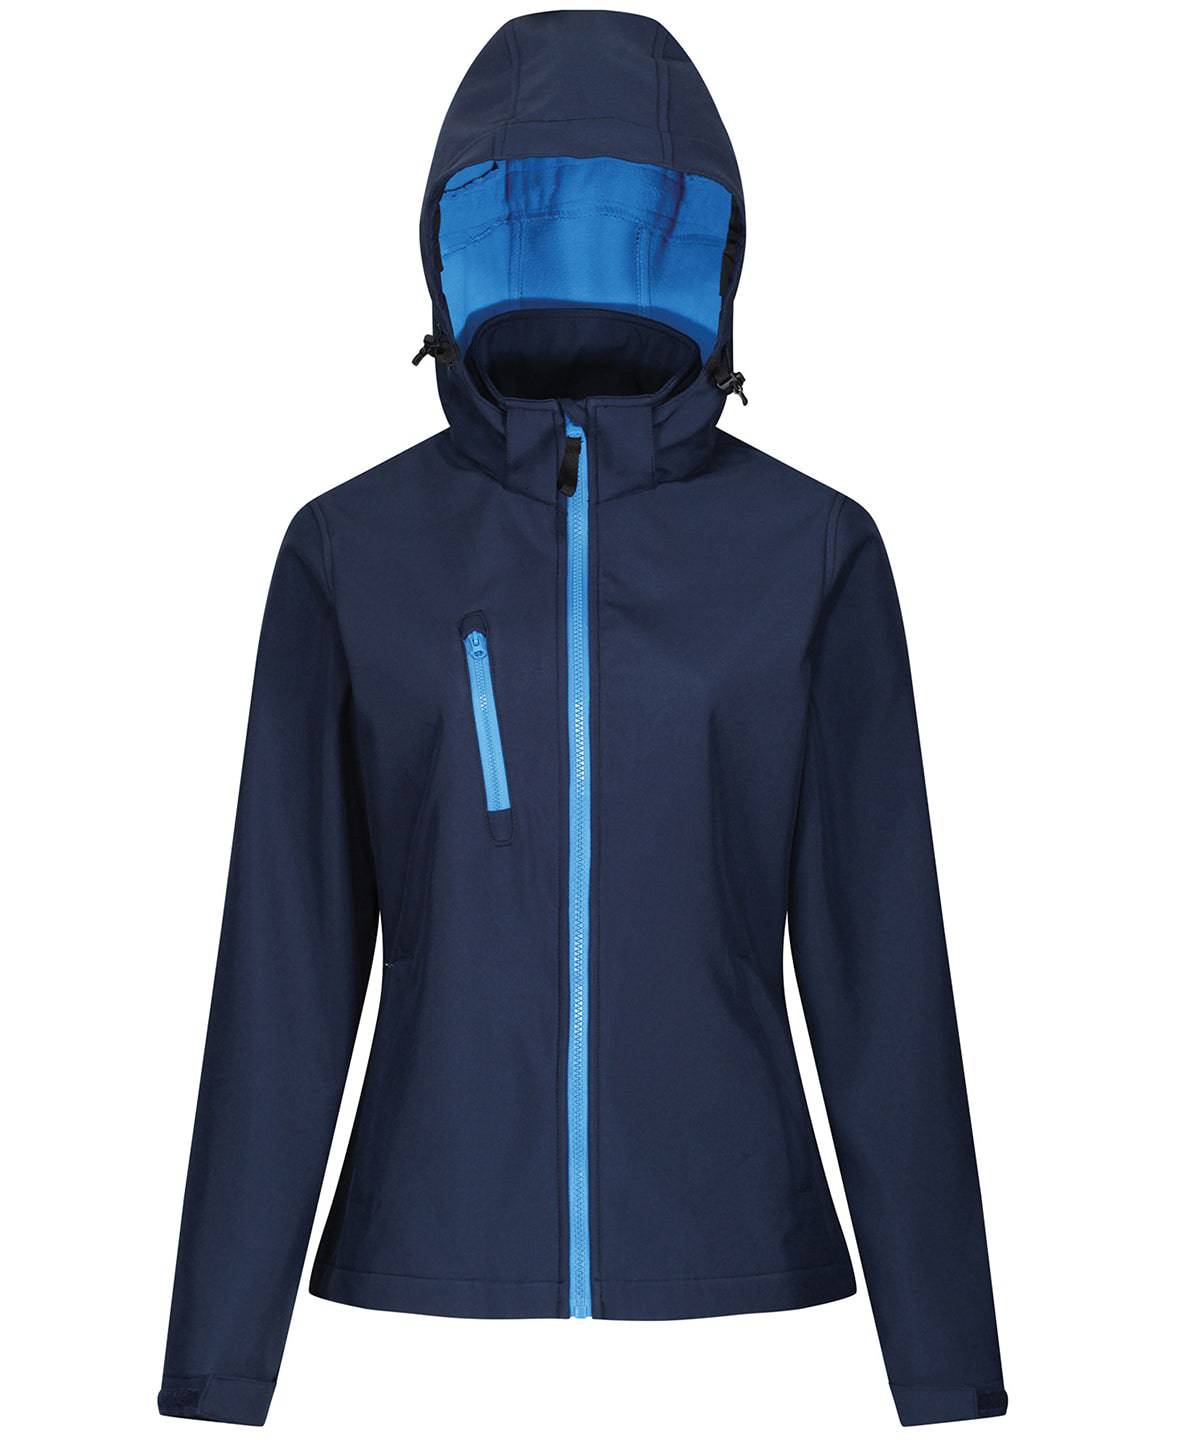 Navy/French Blue - Women's venturer 3-layer hooded softshell jacket